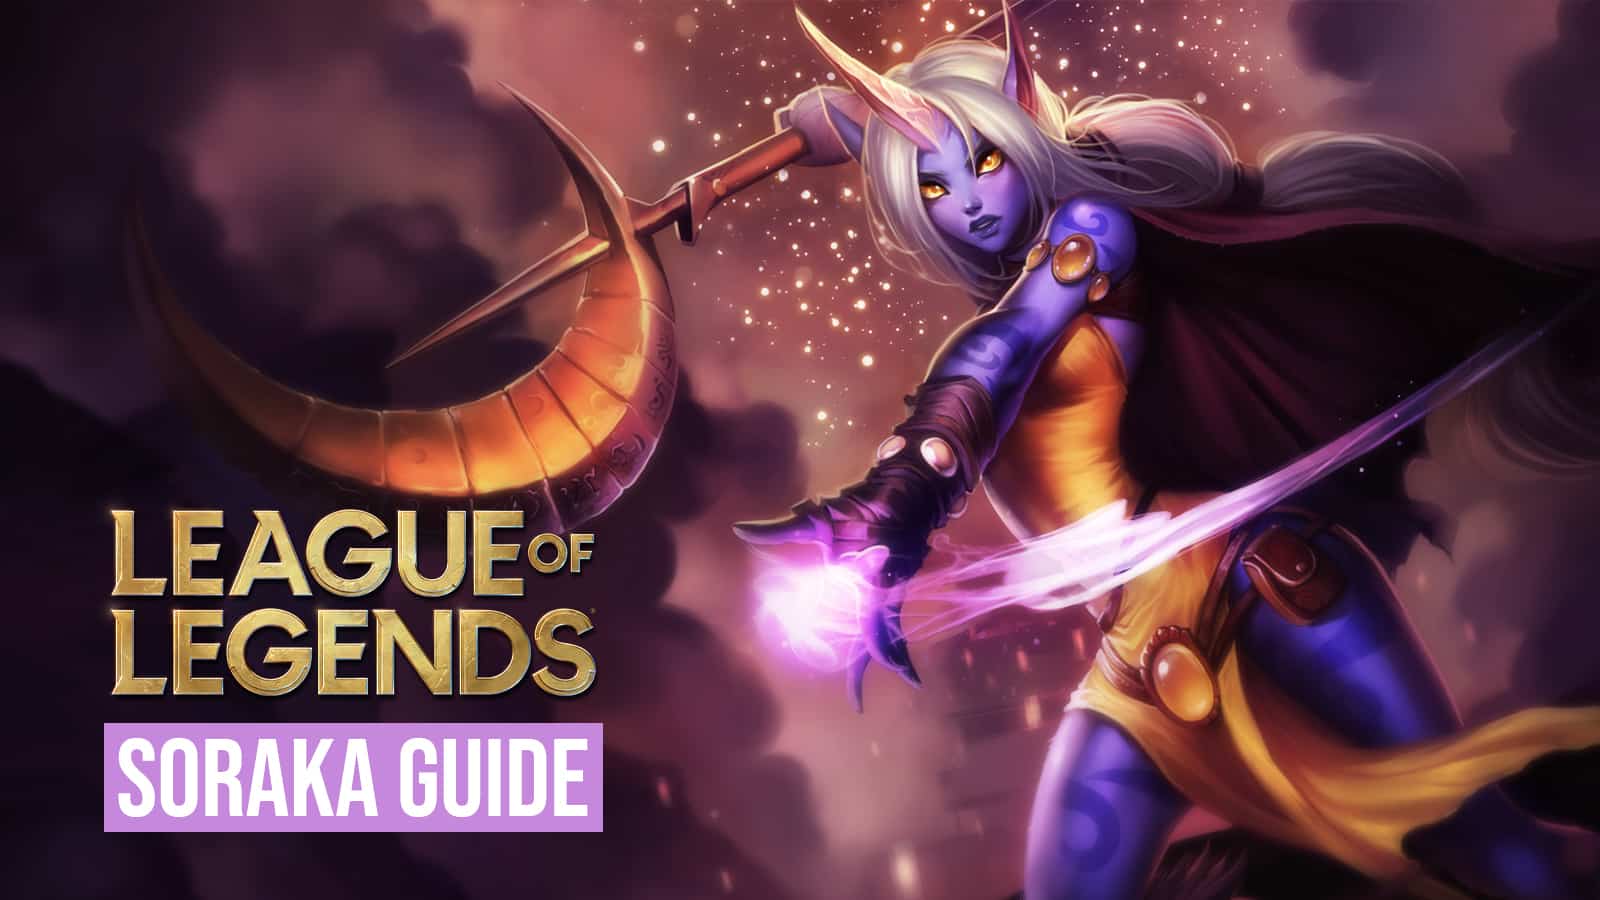 Soraka guide League of Legends best builds runes tips tricks skins